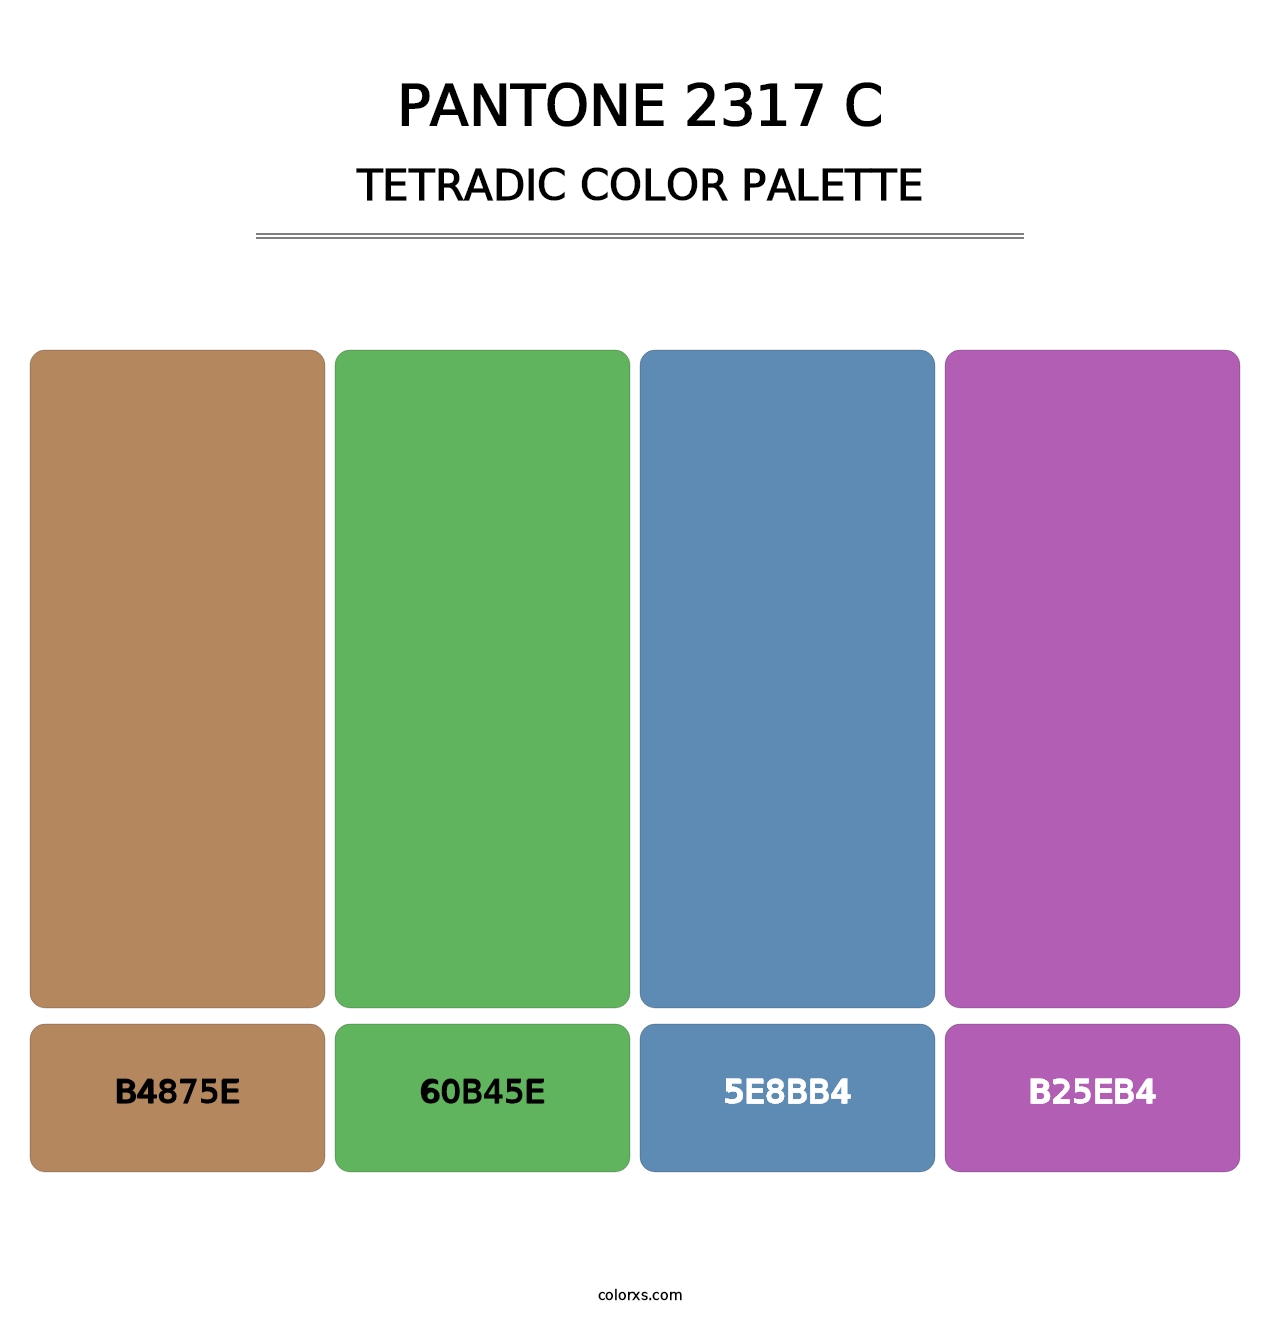 PANTONE 2317 C - Tetradic Color Palette